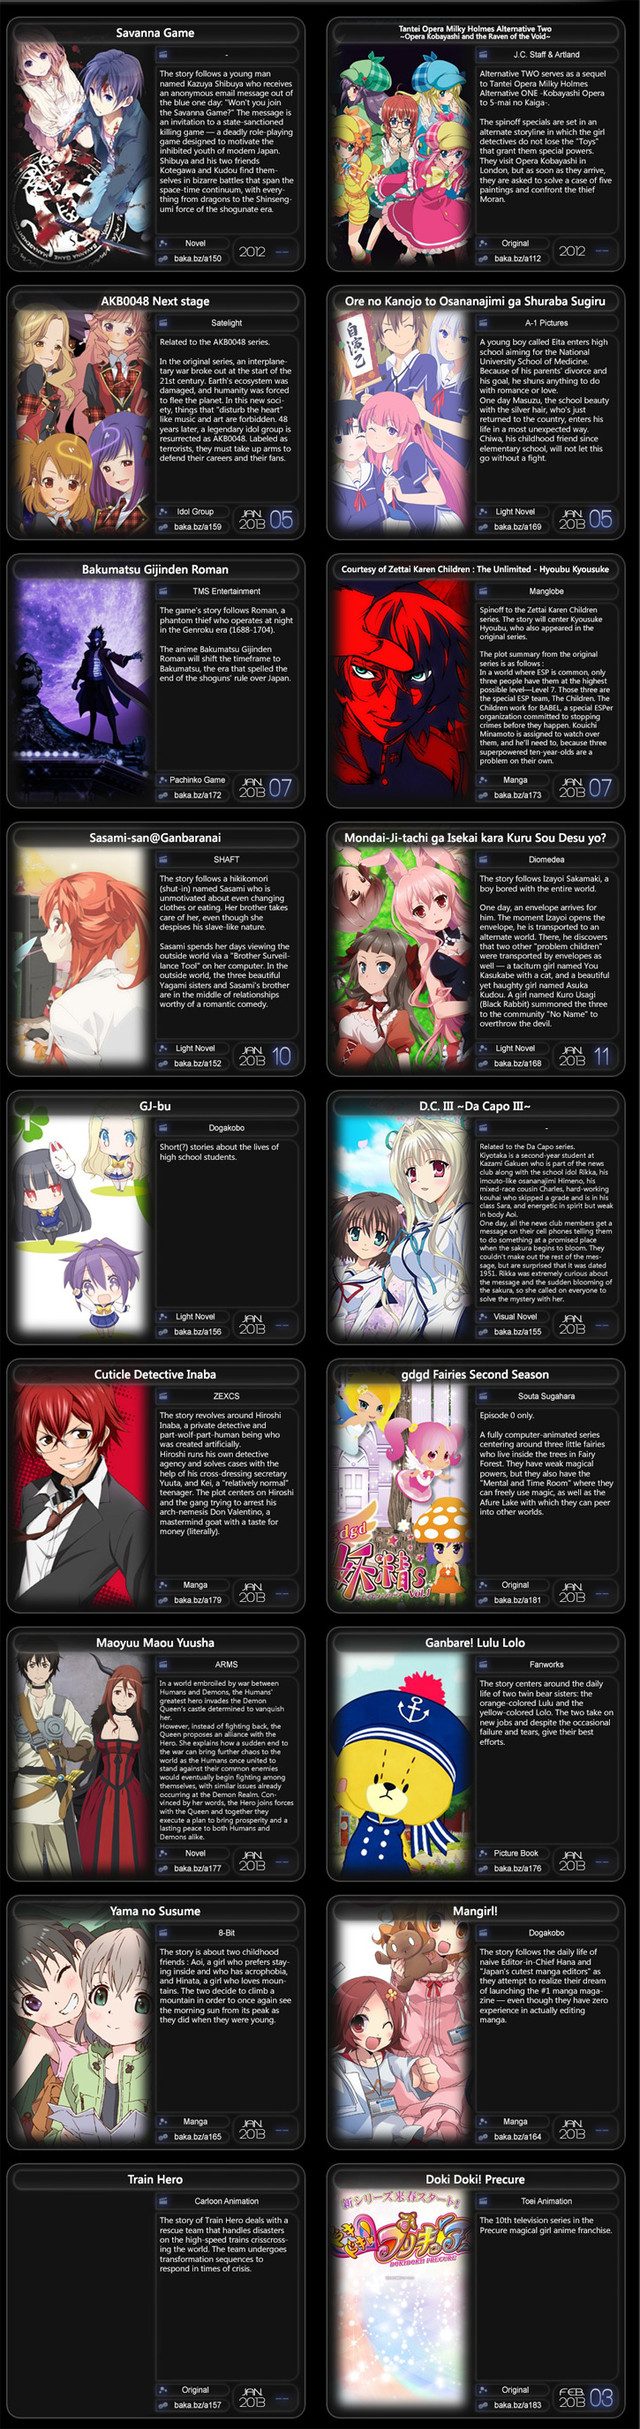 Anime Chart 2013